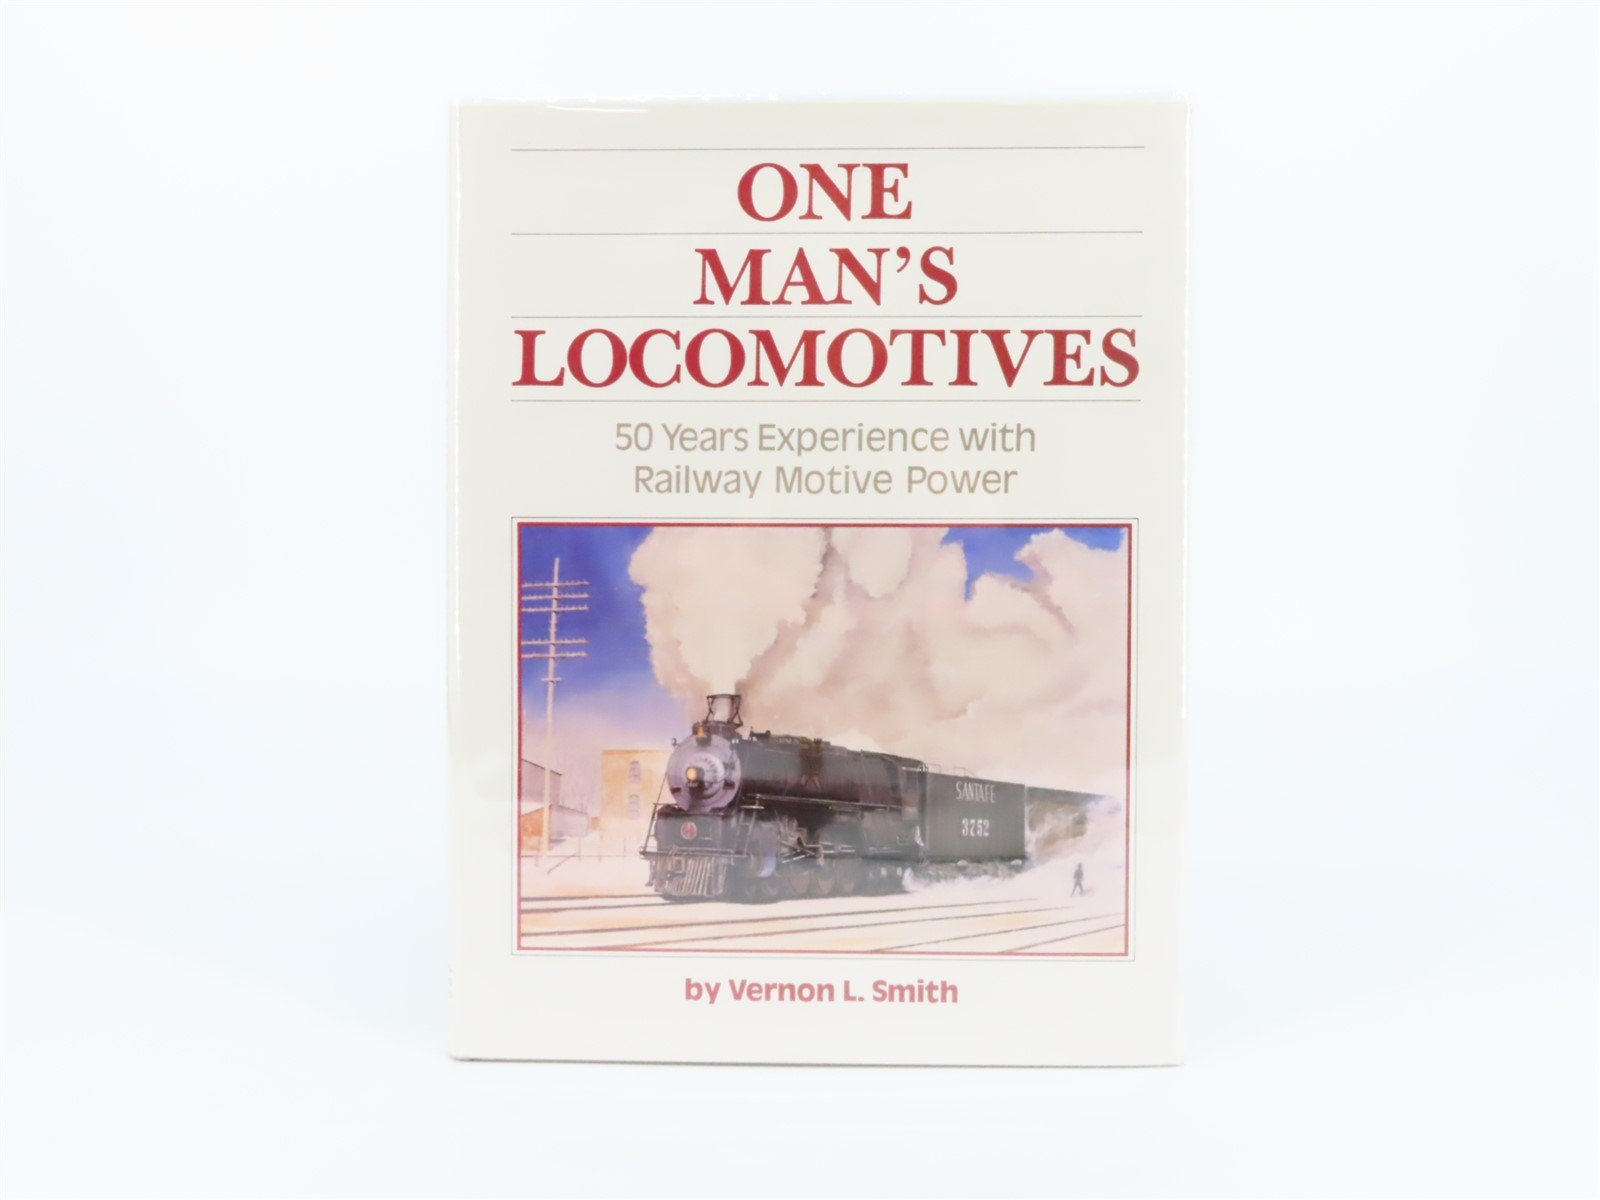 One Man's Locomotives by Vernon L. Smith ©1987 HC Book